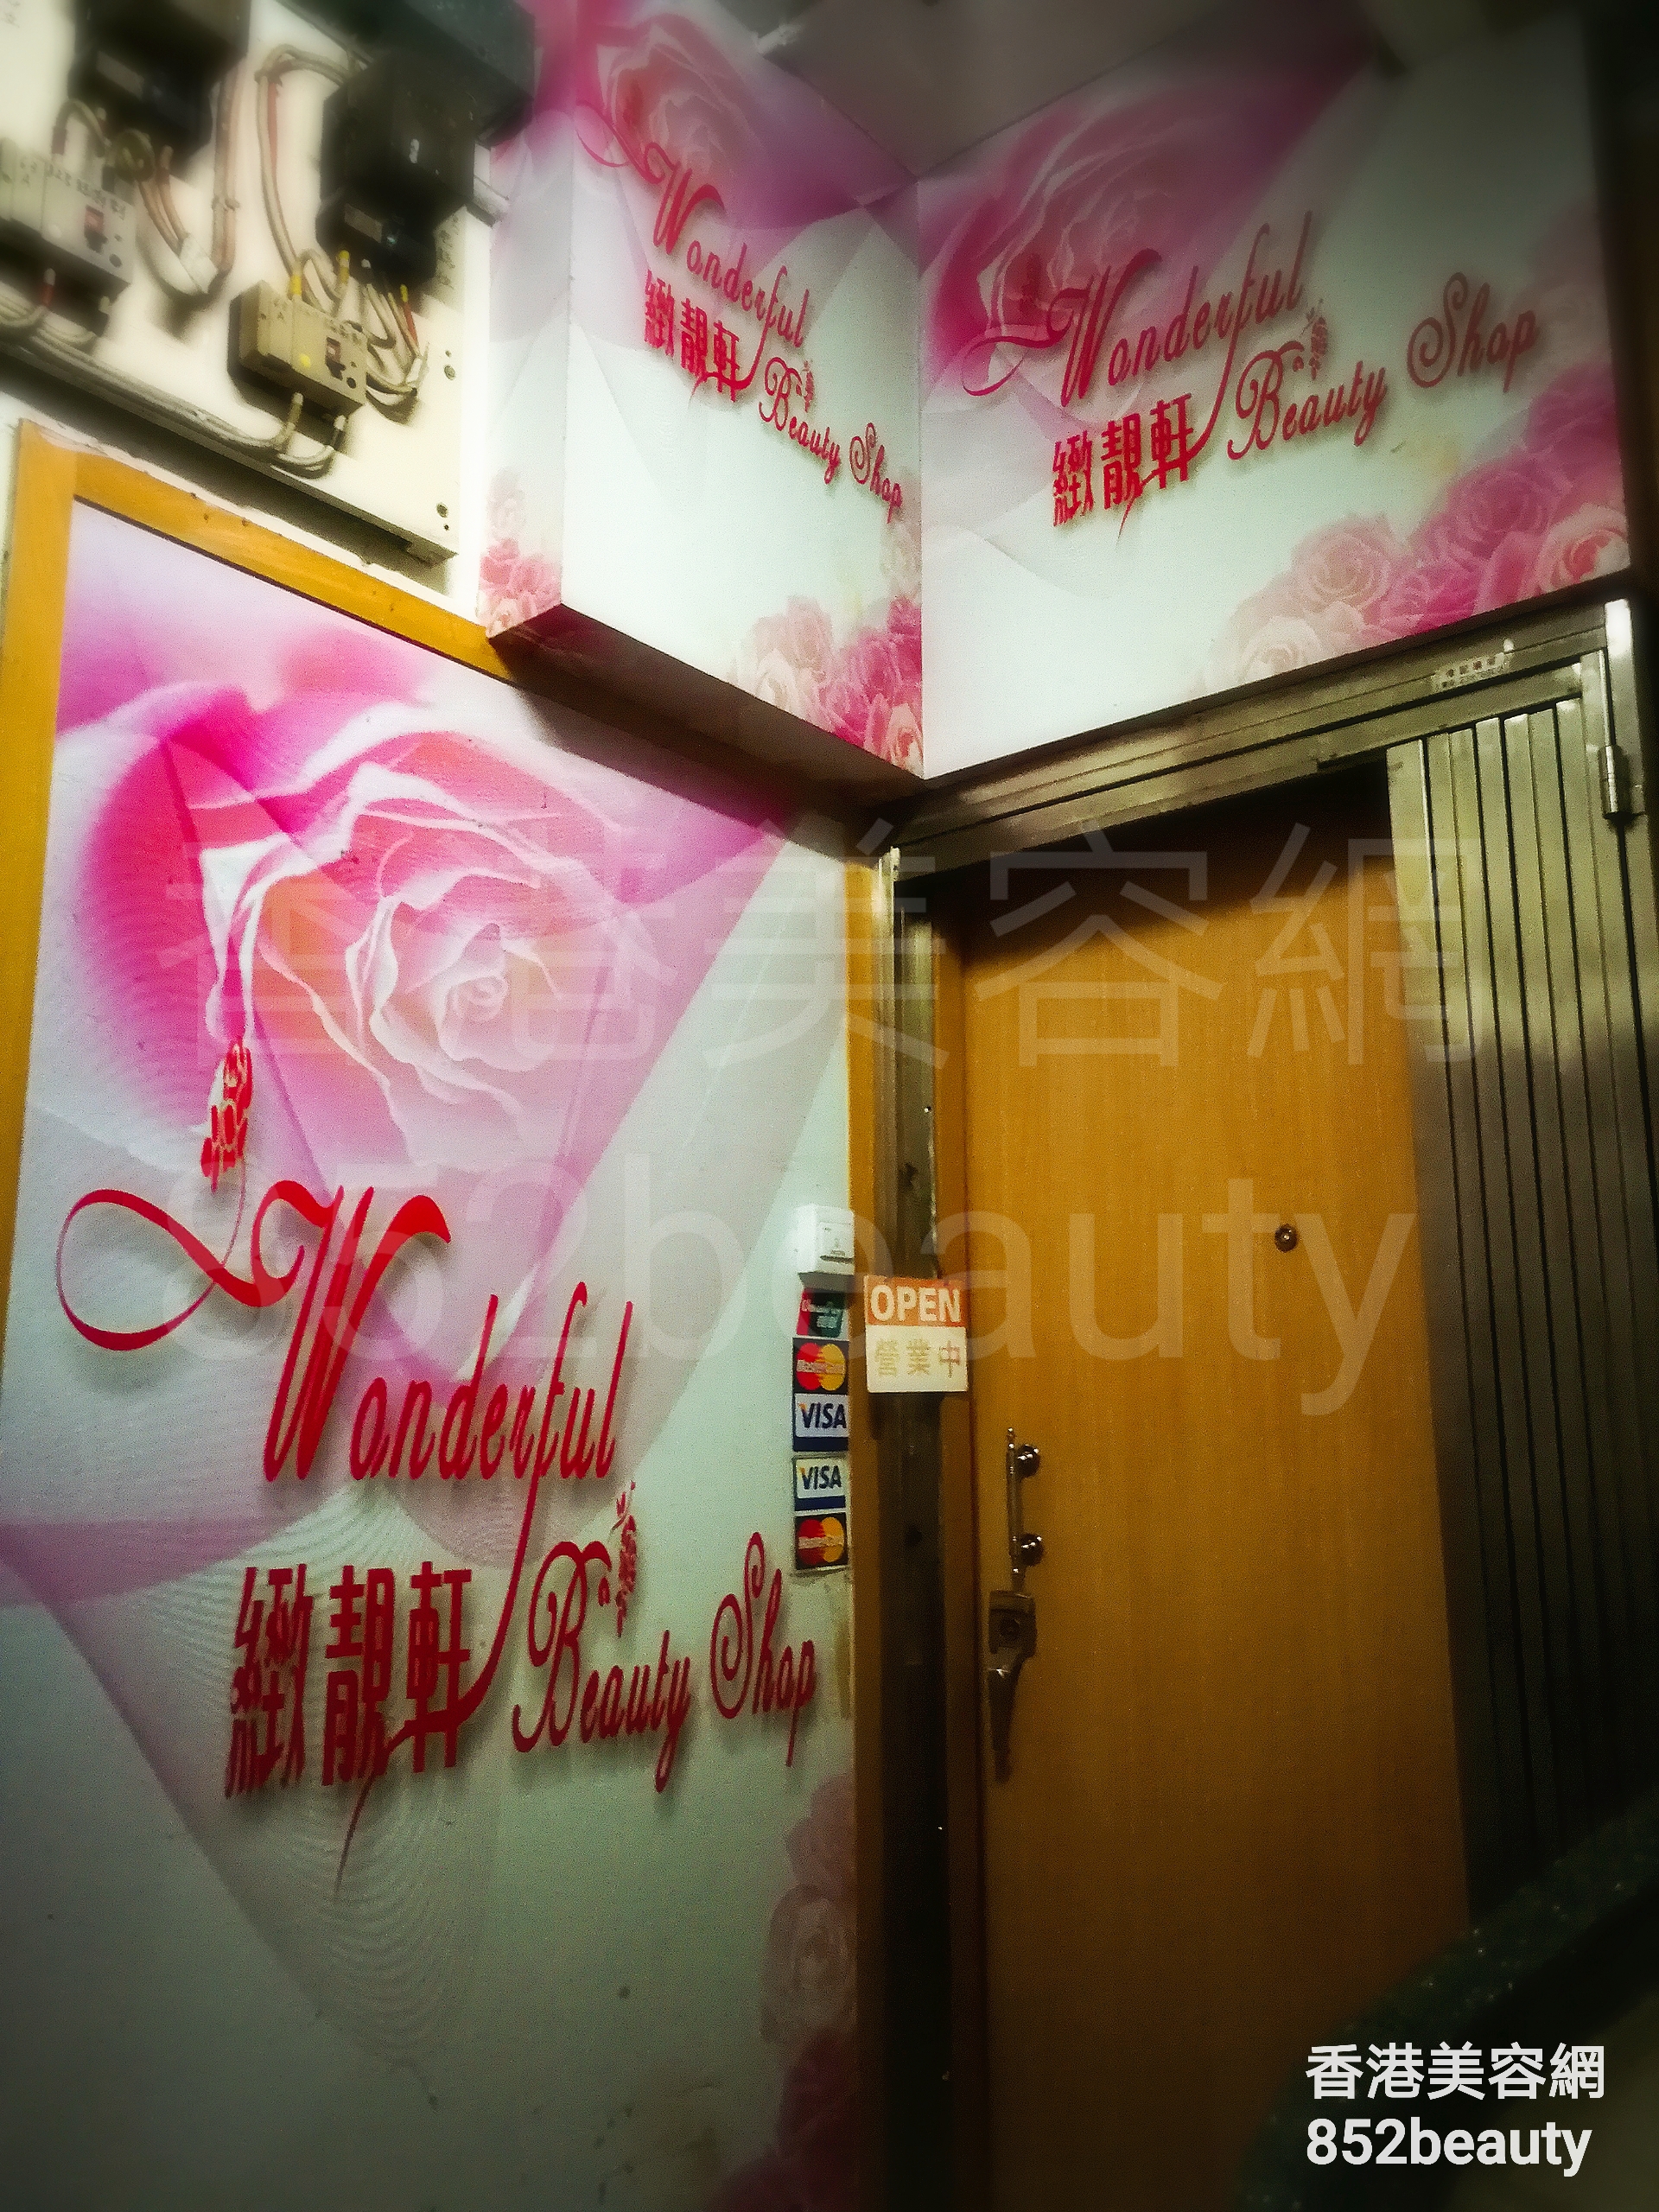 Eye Care: 緻靚軒 Wonderful Beauty Shop